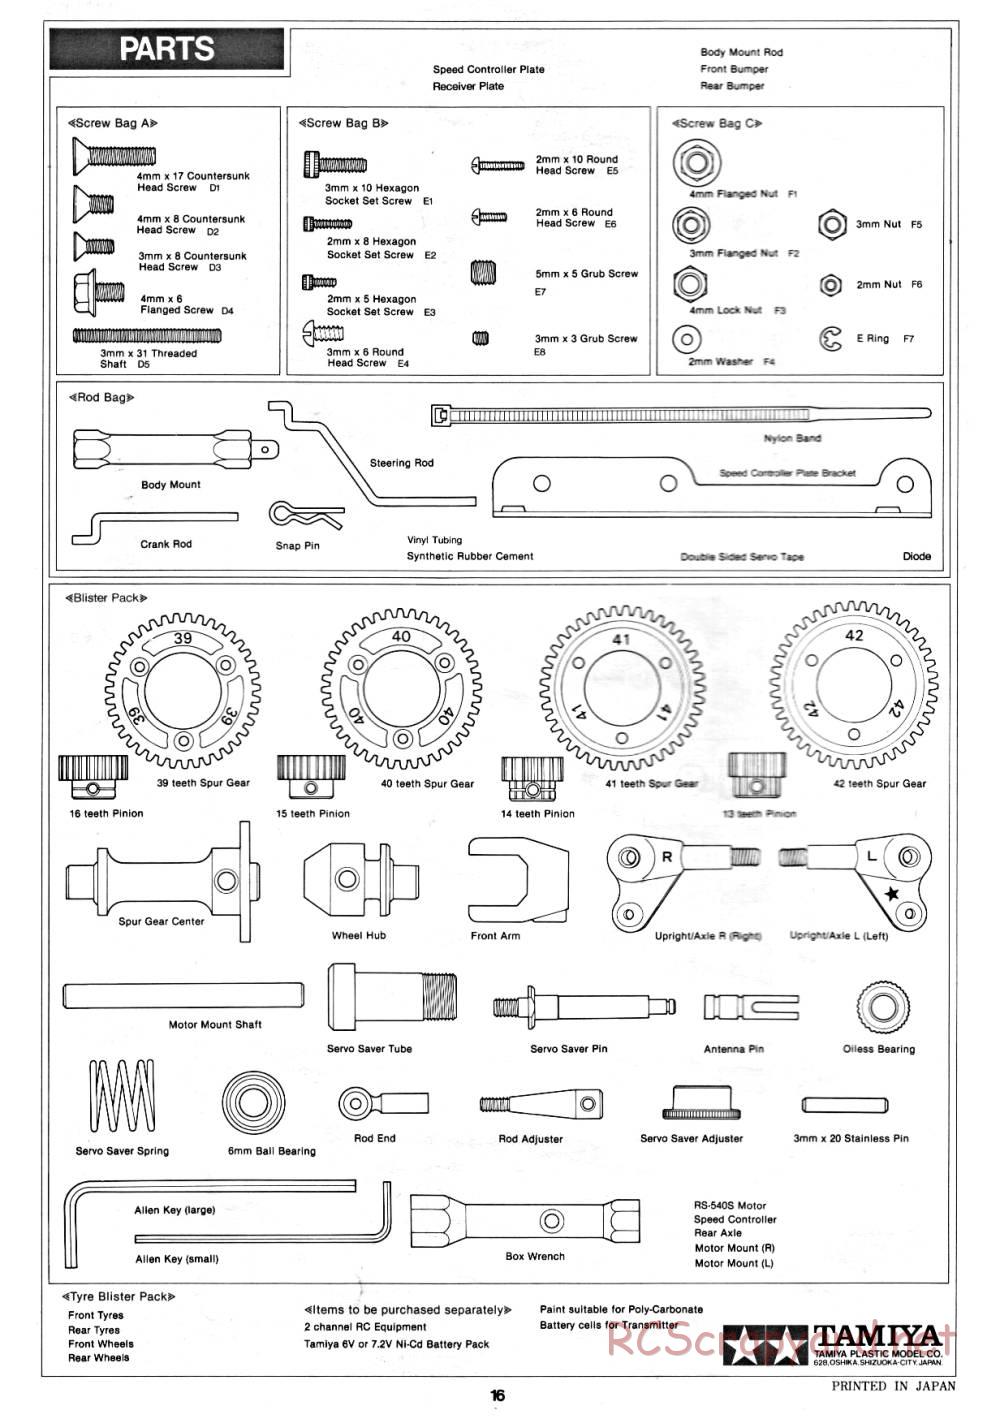 Tamiya - Datsun 280ZX - 58022 - Manual - Page 16